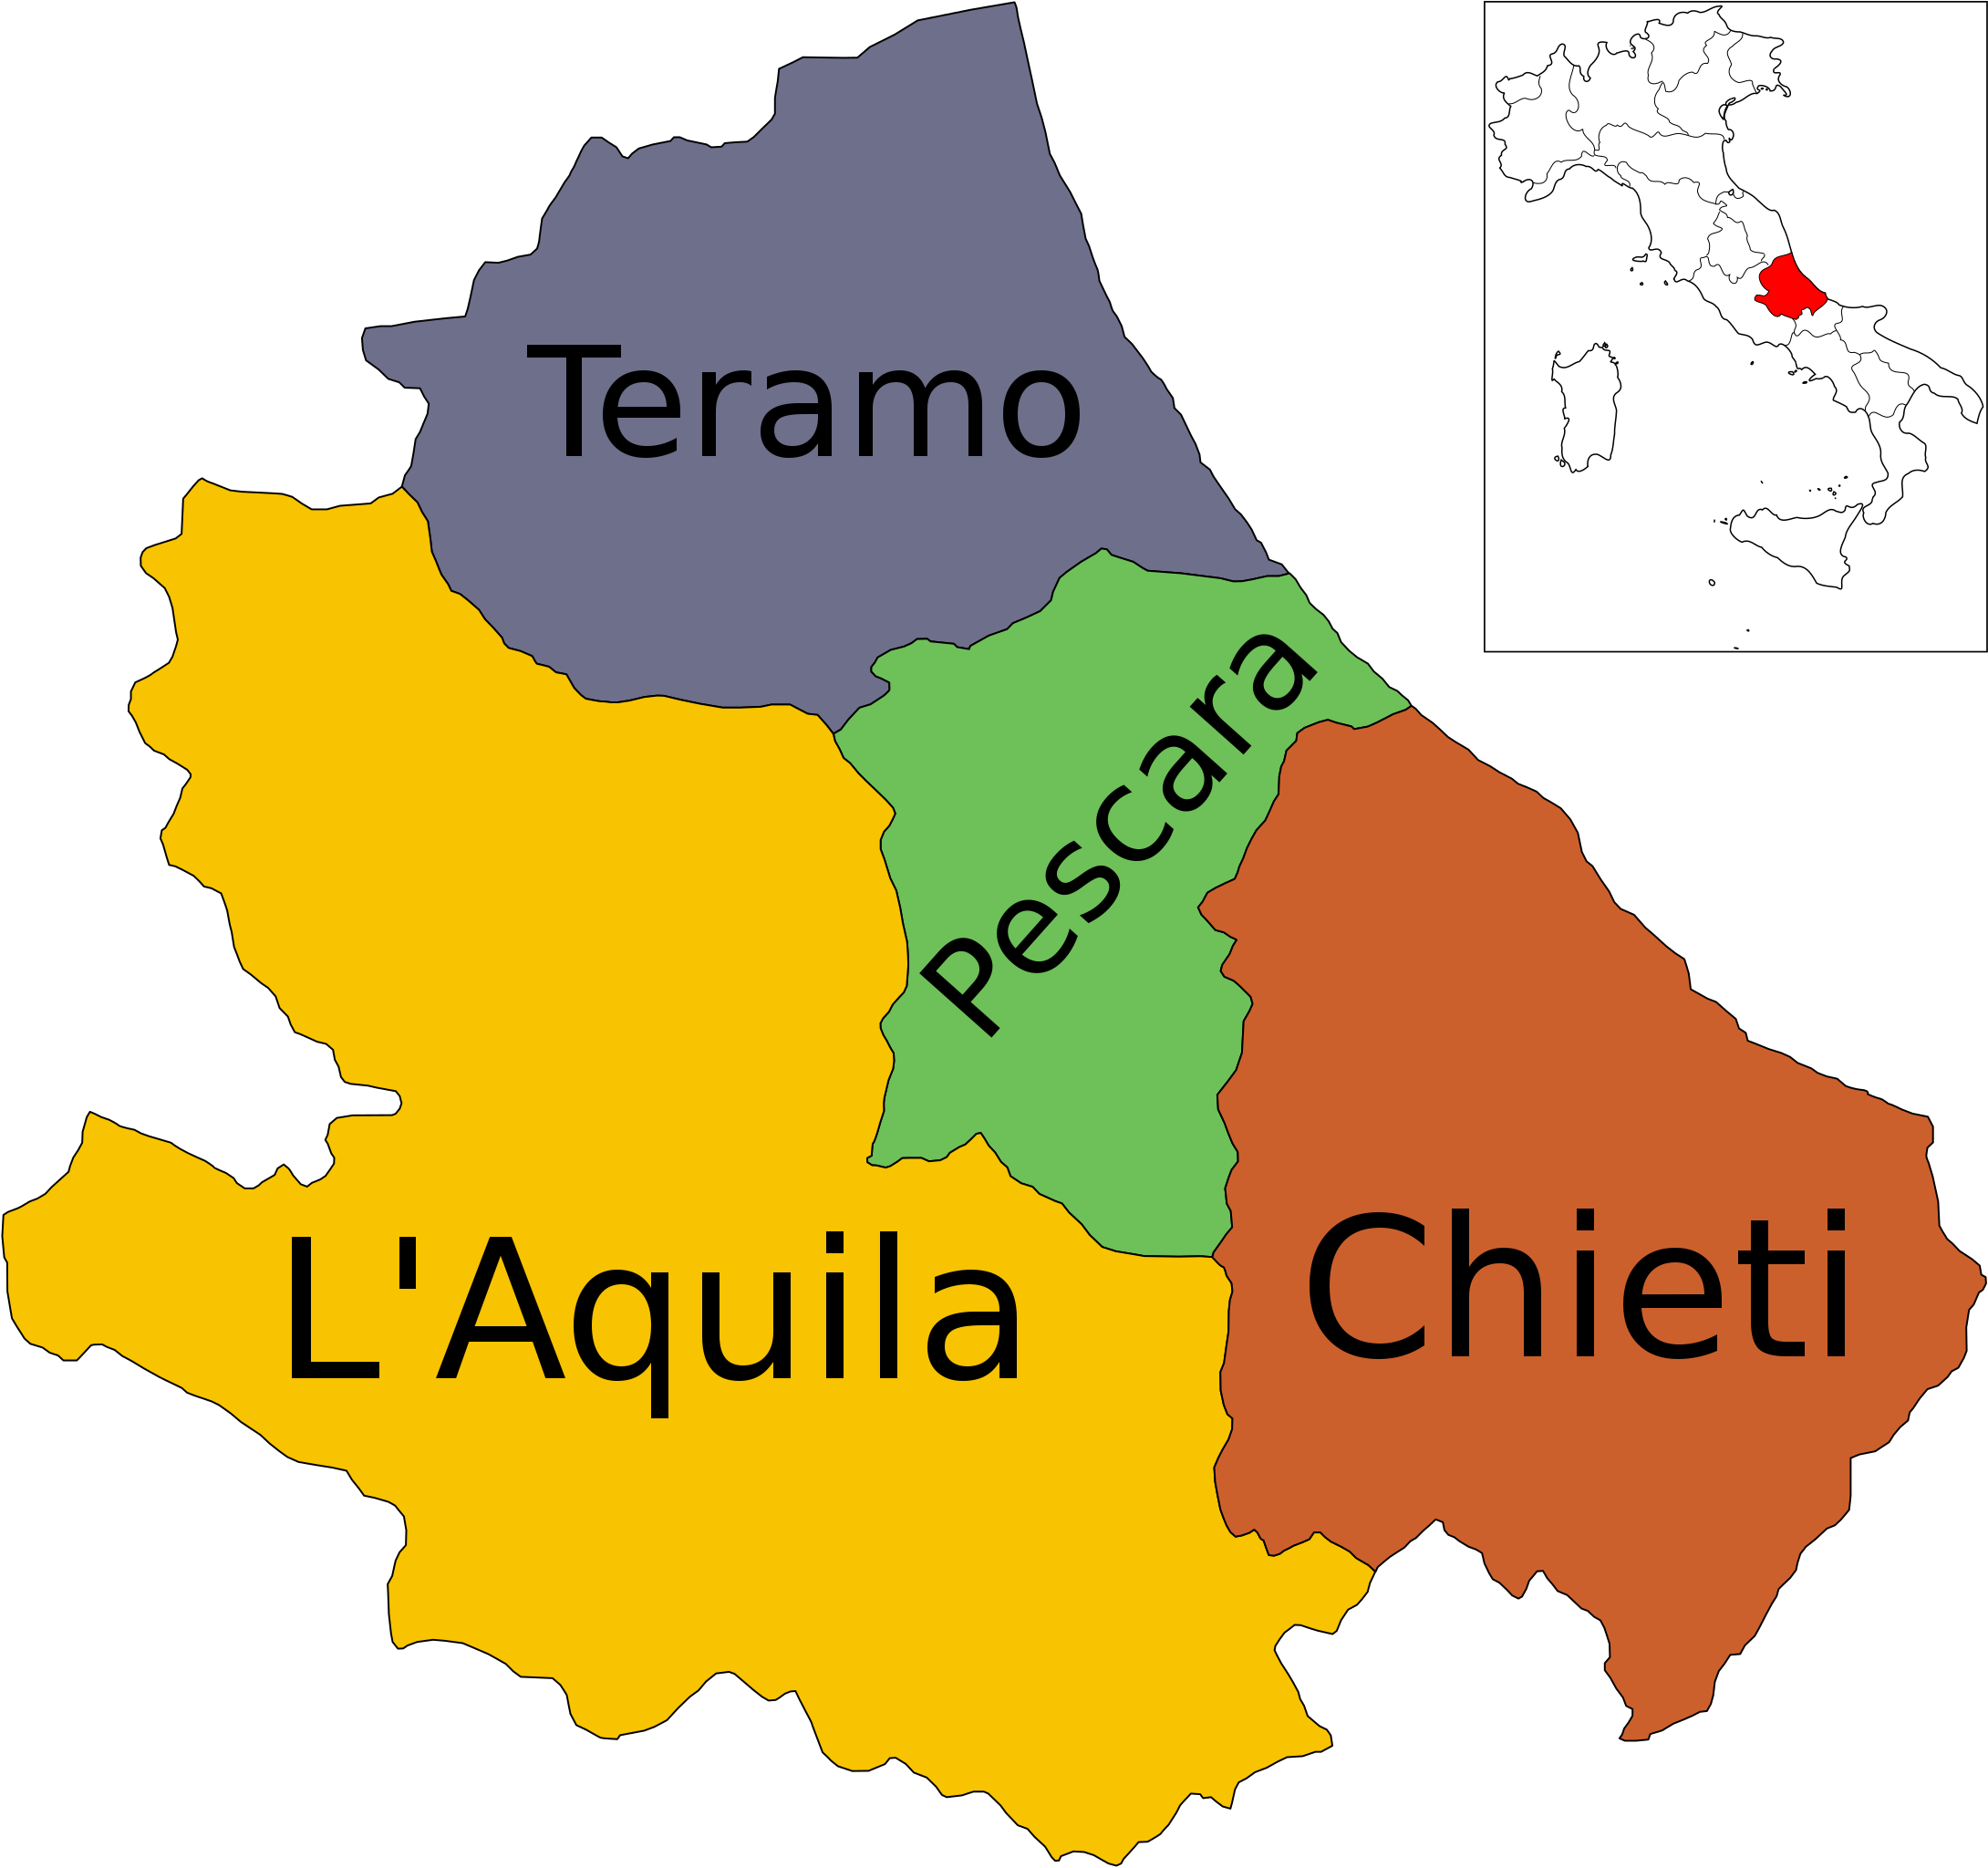 Vaizdas:Map of region of Abruzzo, Italy, with nemunolinija.lt – Vikipedija